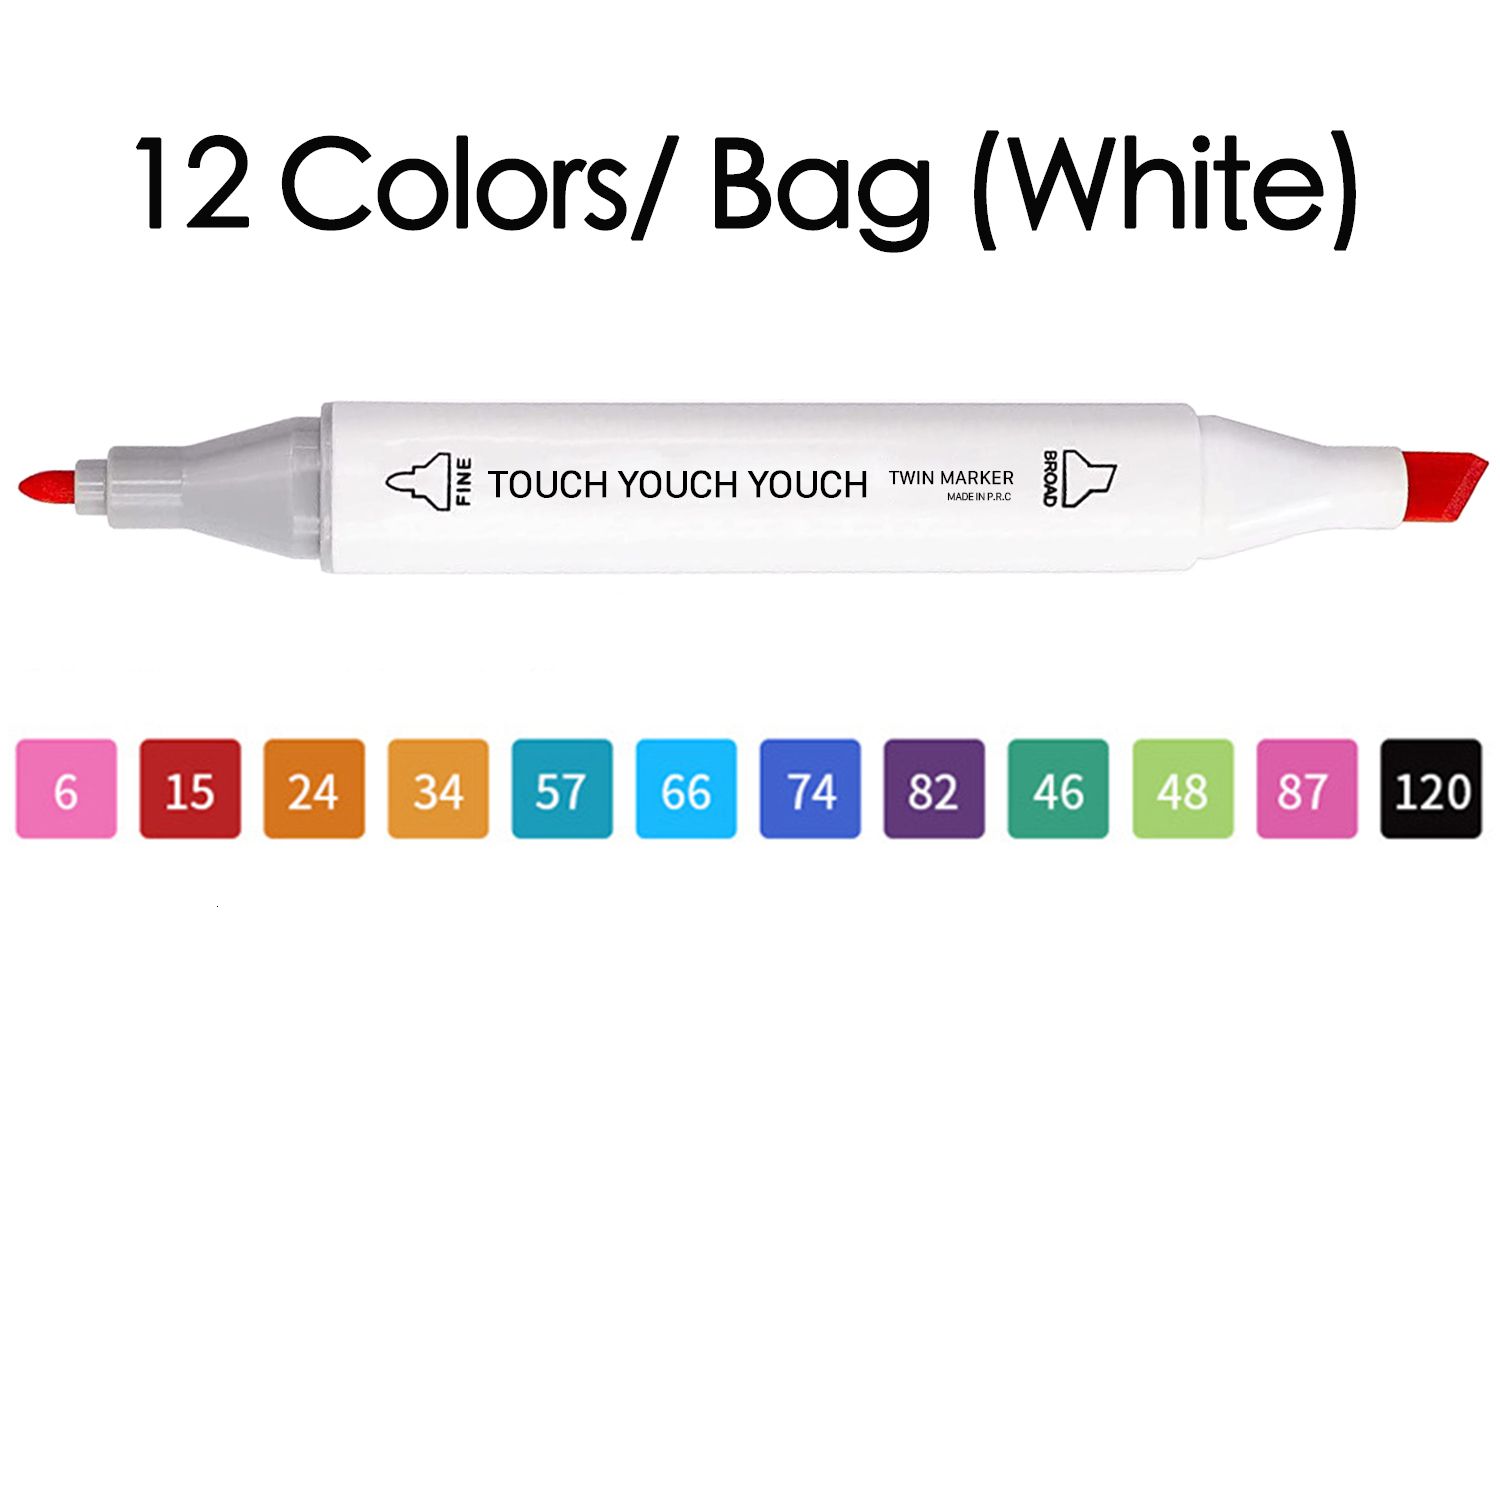 12 Colors-Bag-White